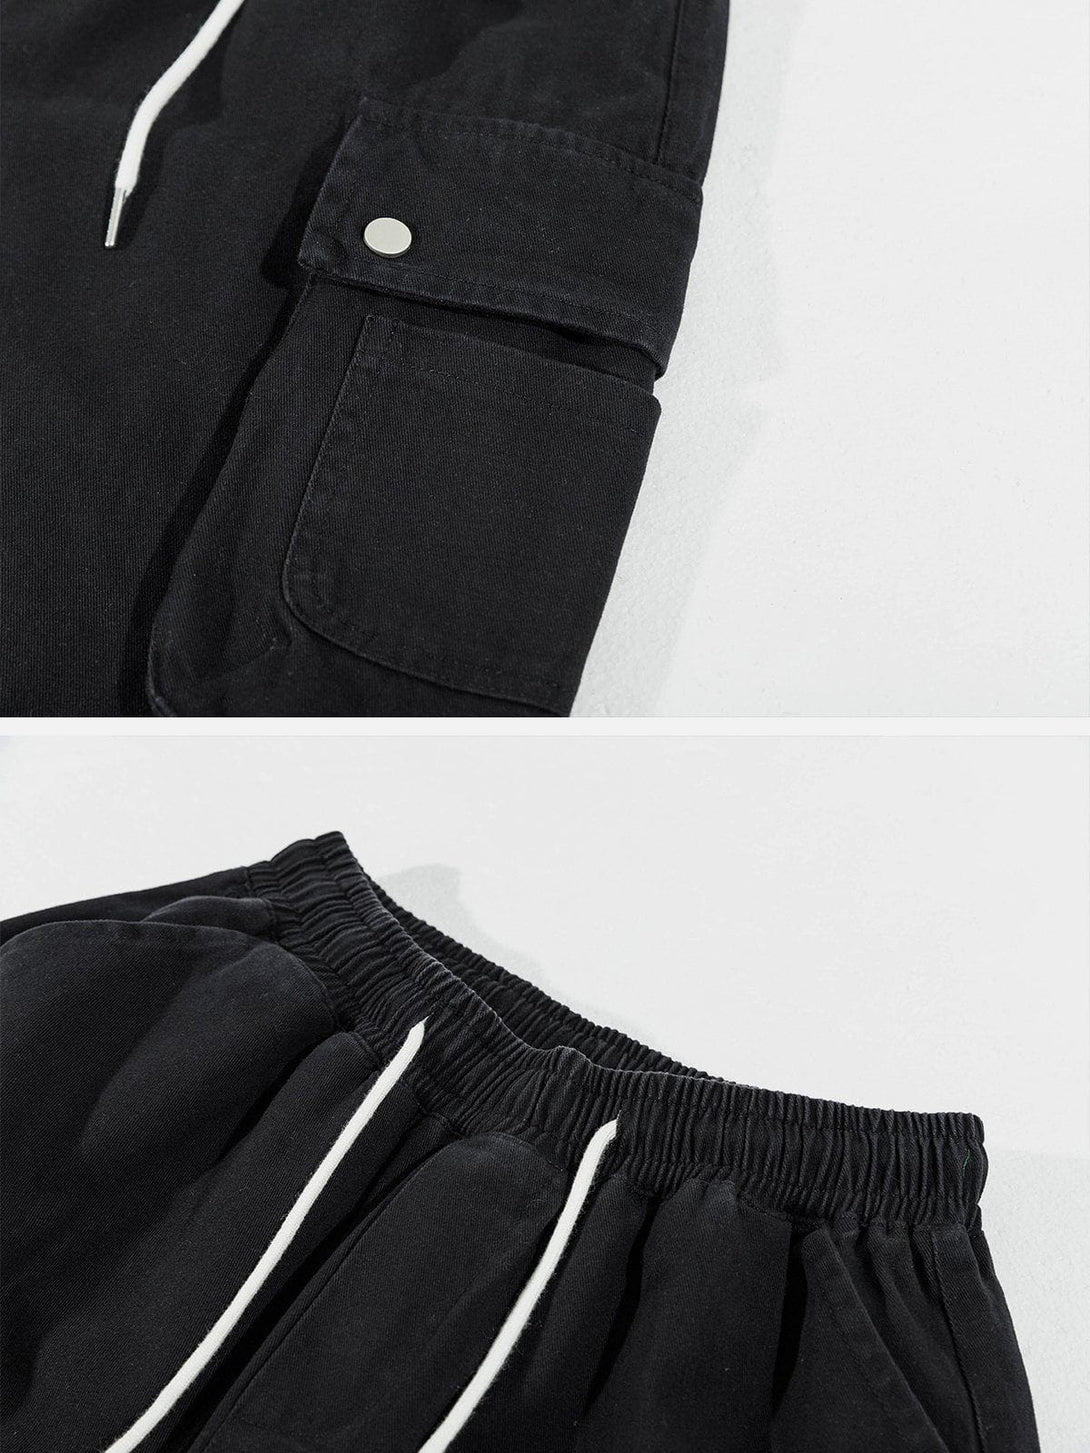 Majesda® - Pocket Patchwork Shorts outfit ideas streetwear fashion